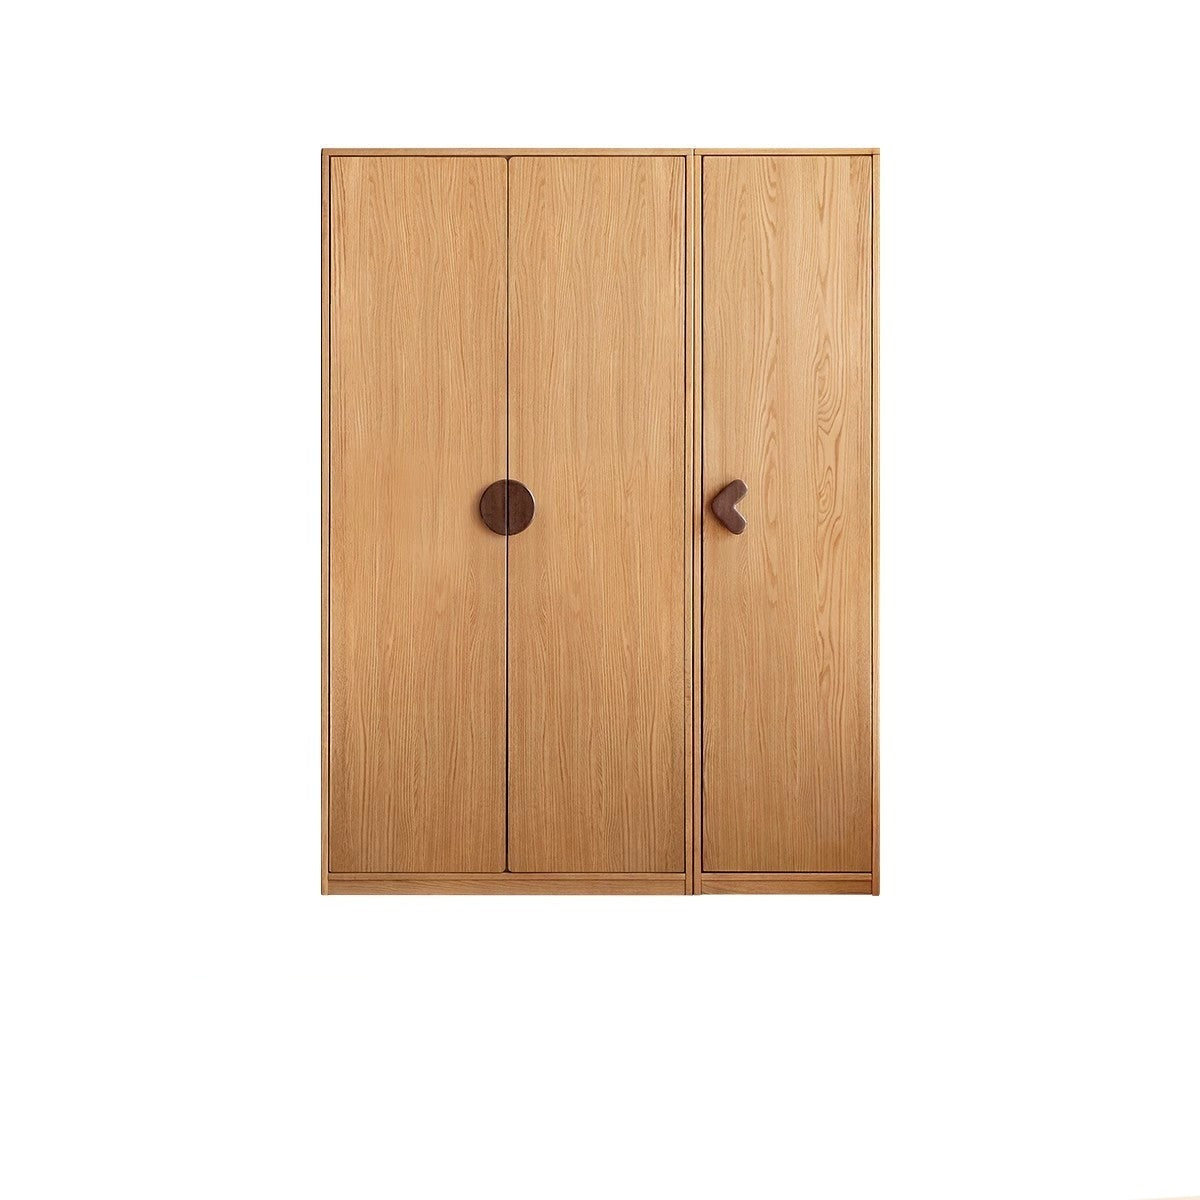 Oak Solid Wood Children's Wardrobe, Bookcase Combination